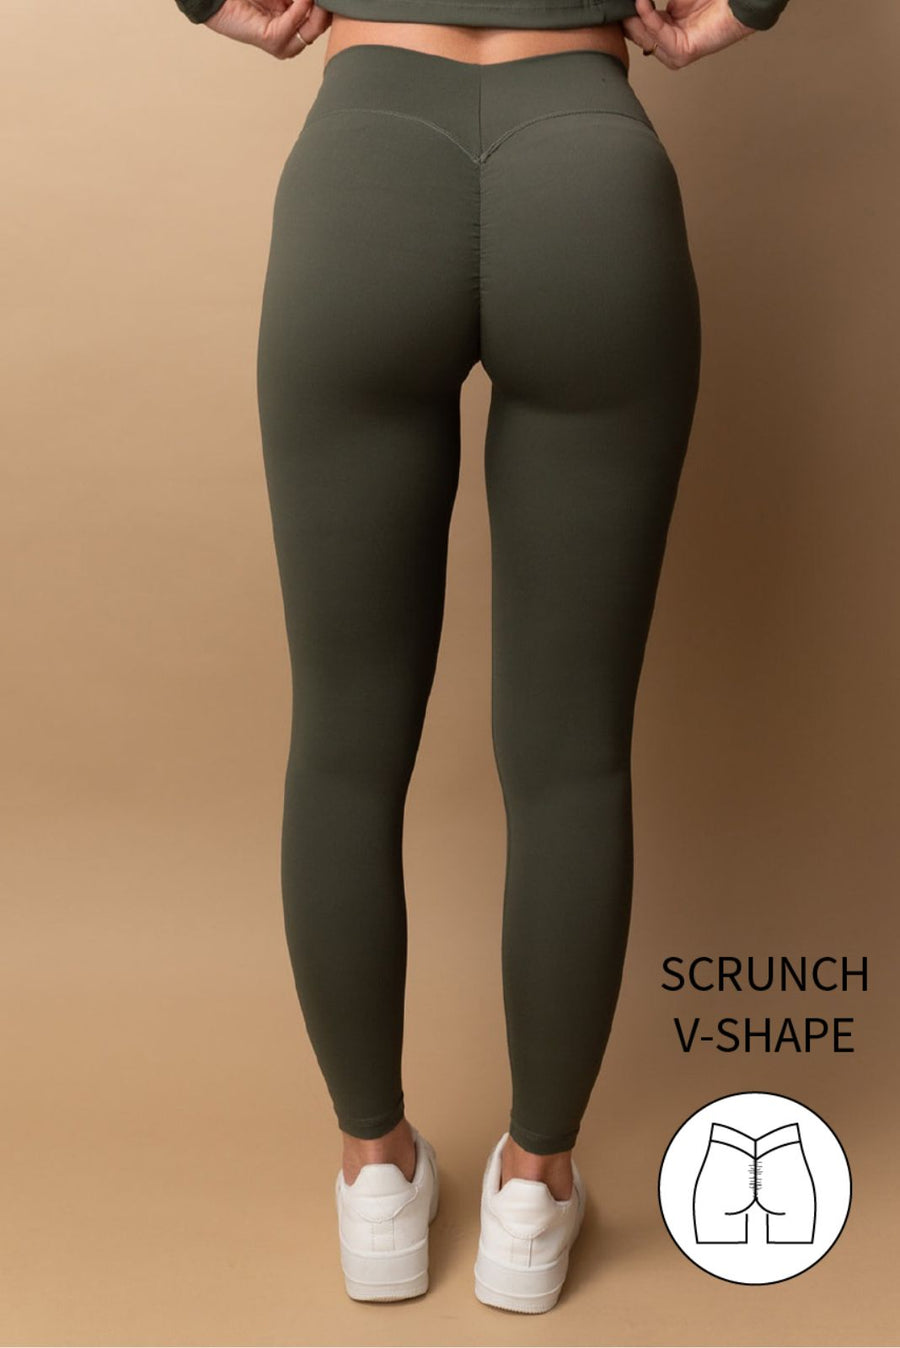 Scrunch – SWY Brand